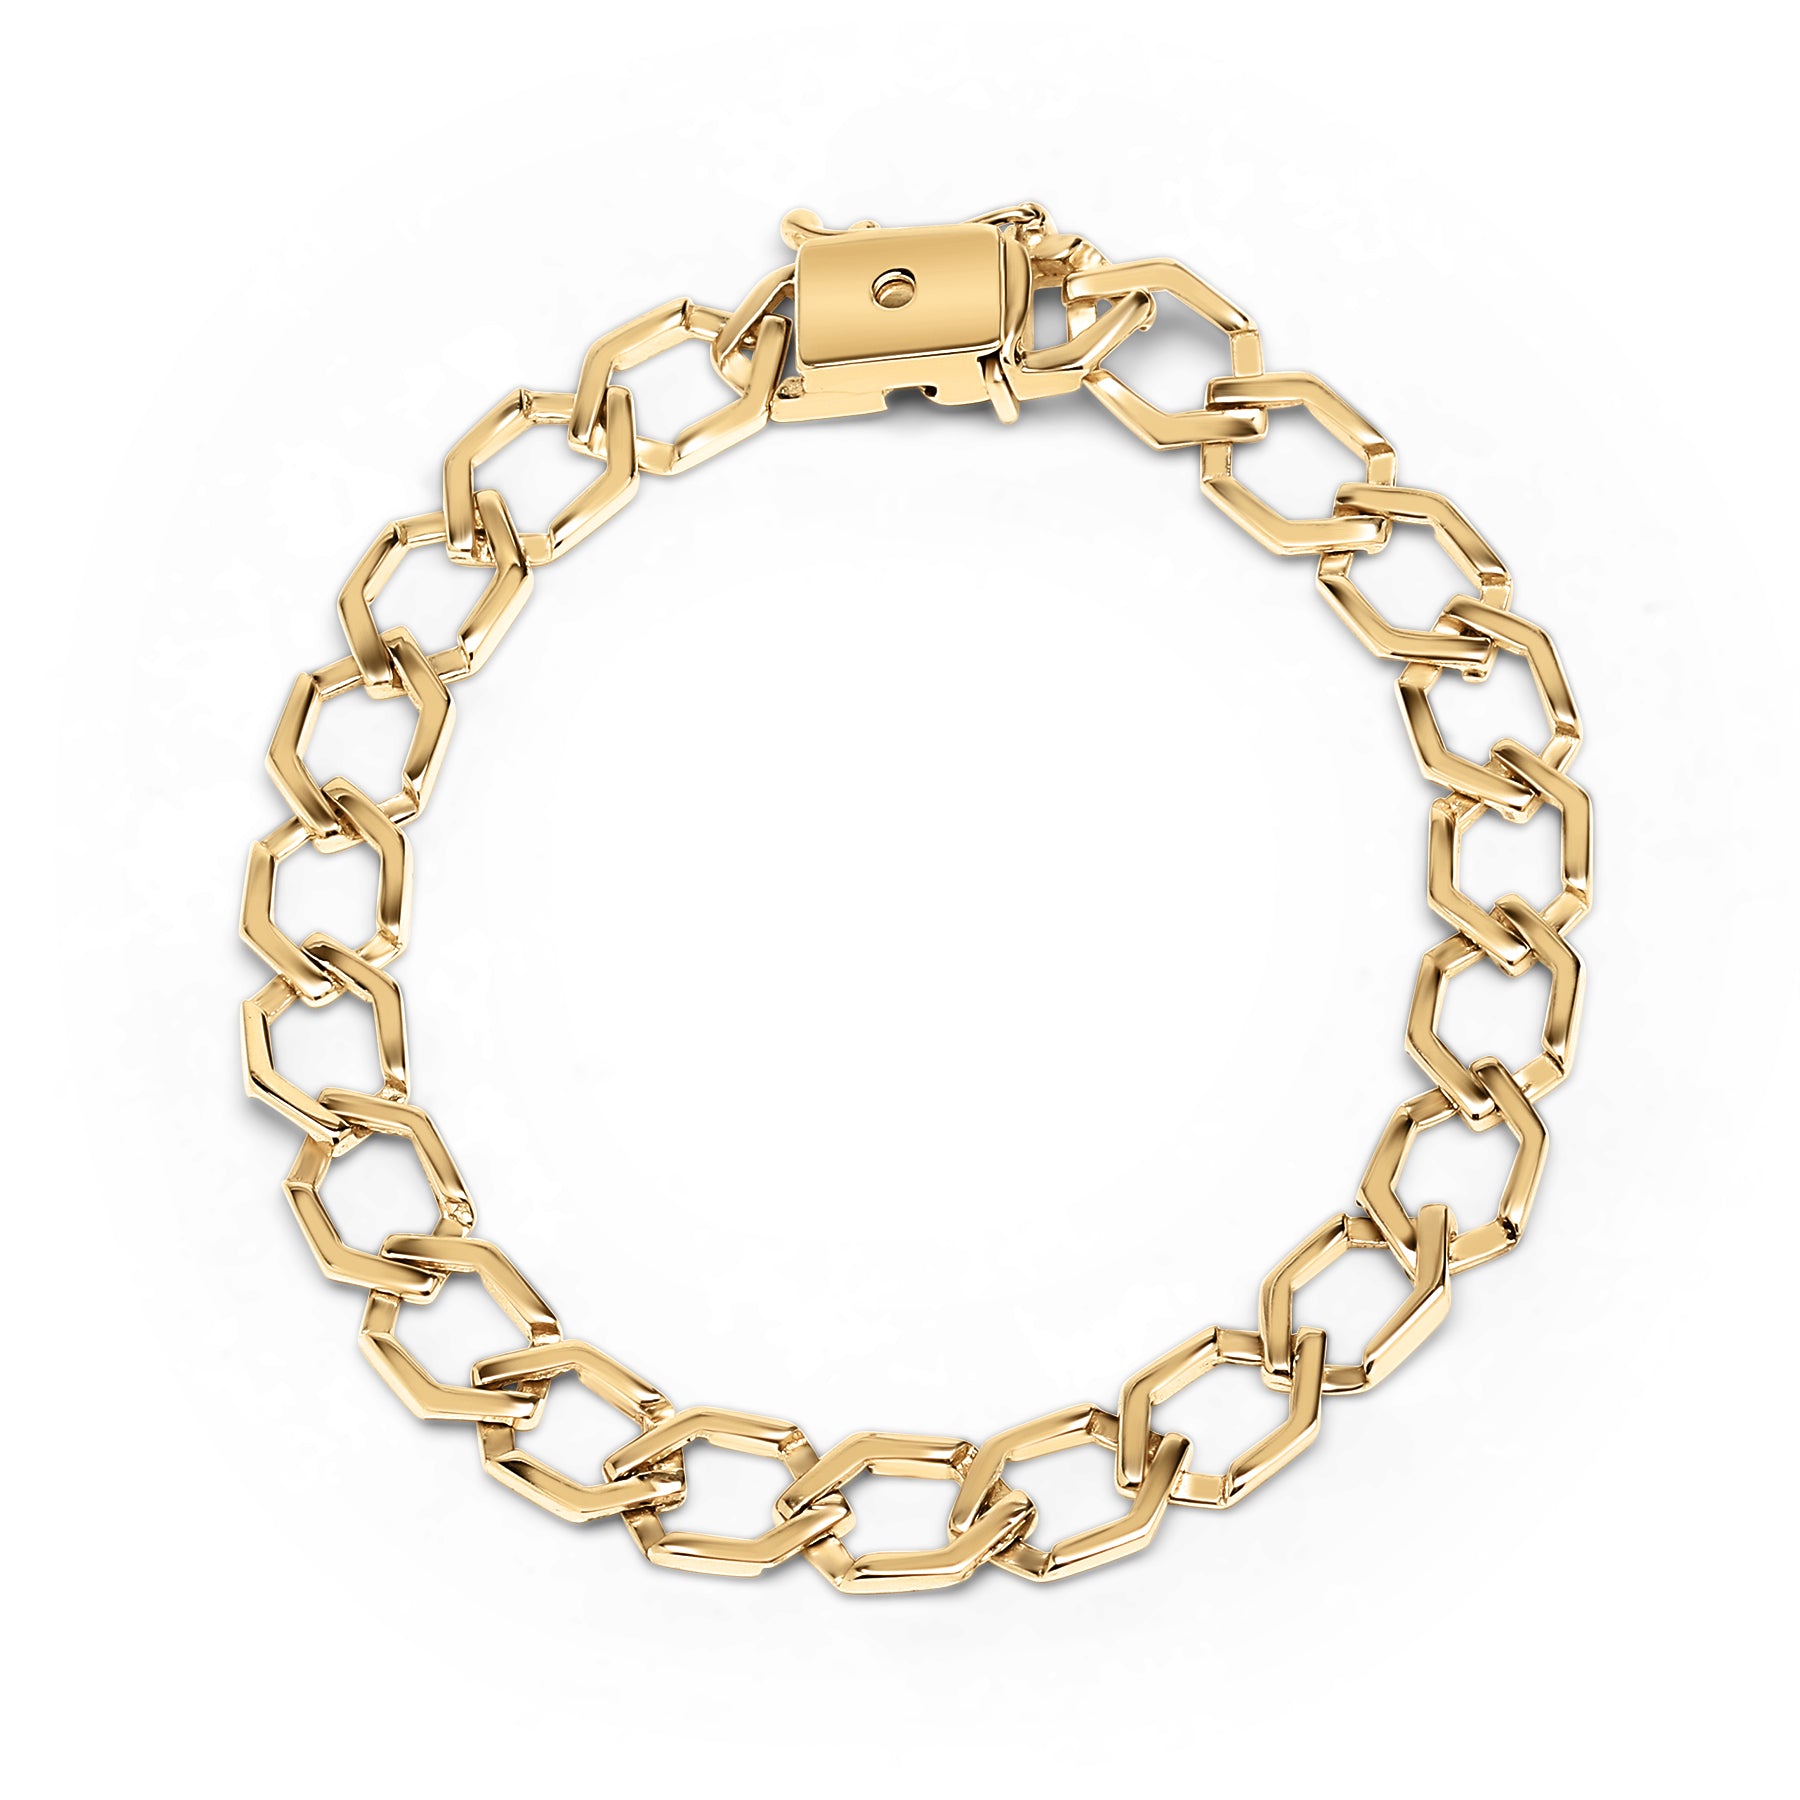 14K Gold Charm Bracelet